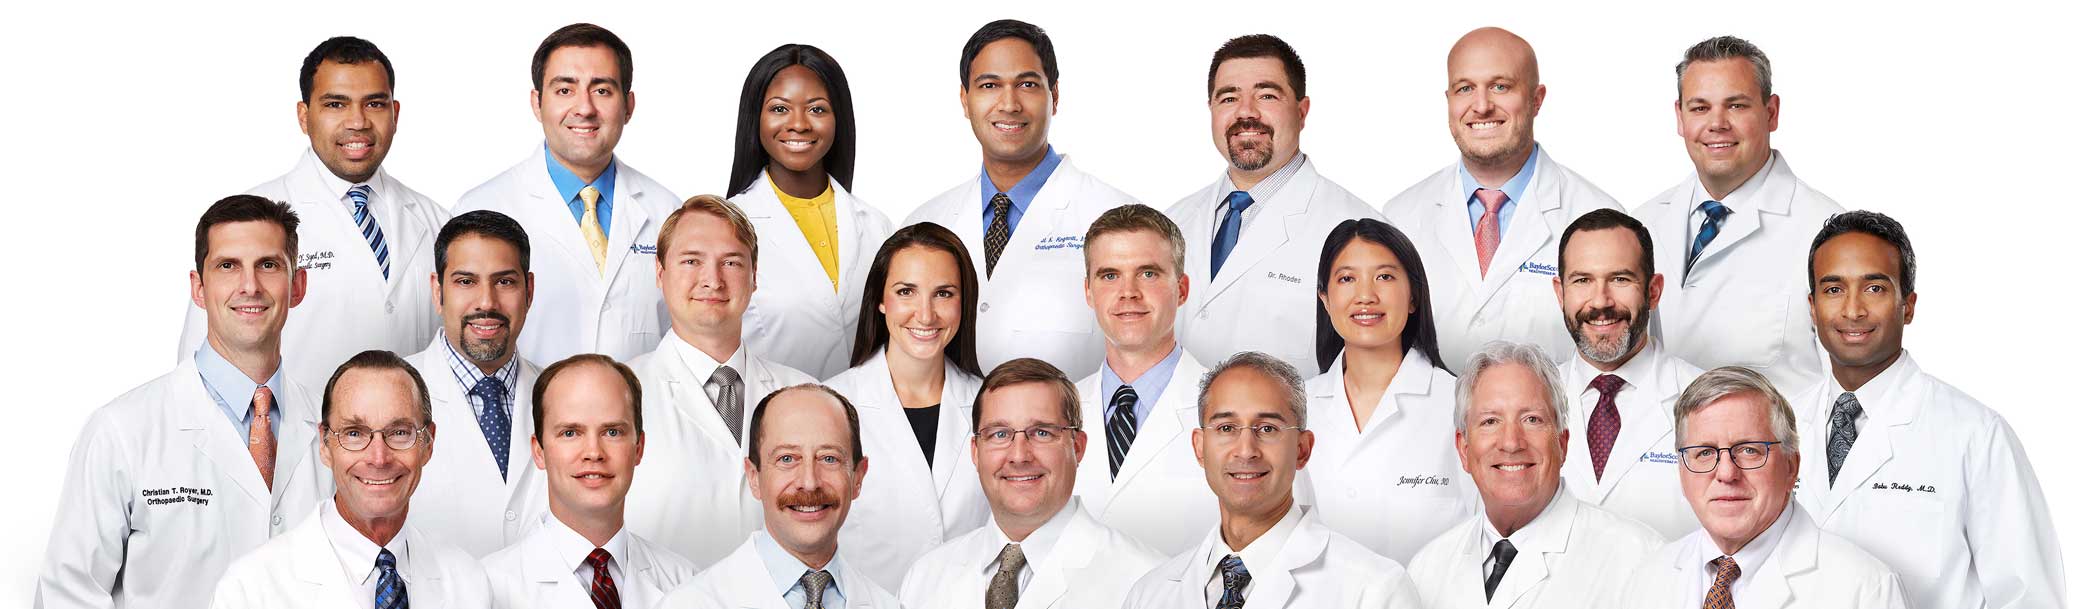 Baylor Scott & White Orthopedic Associates of Dallas doctors group photo